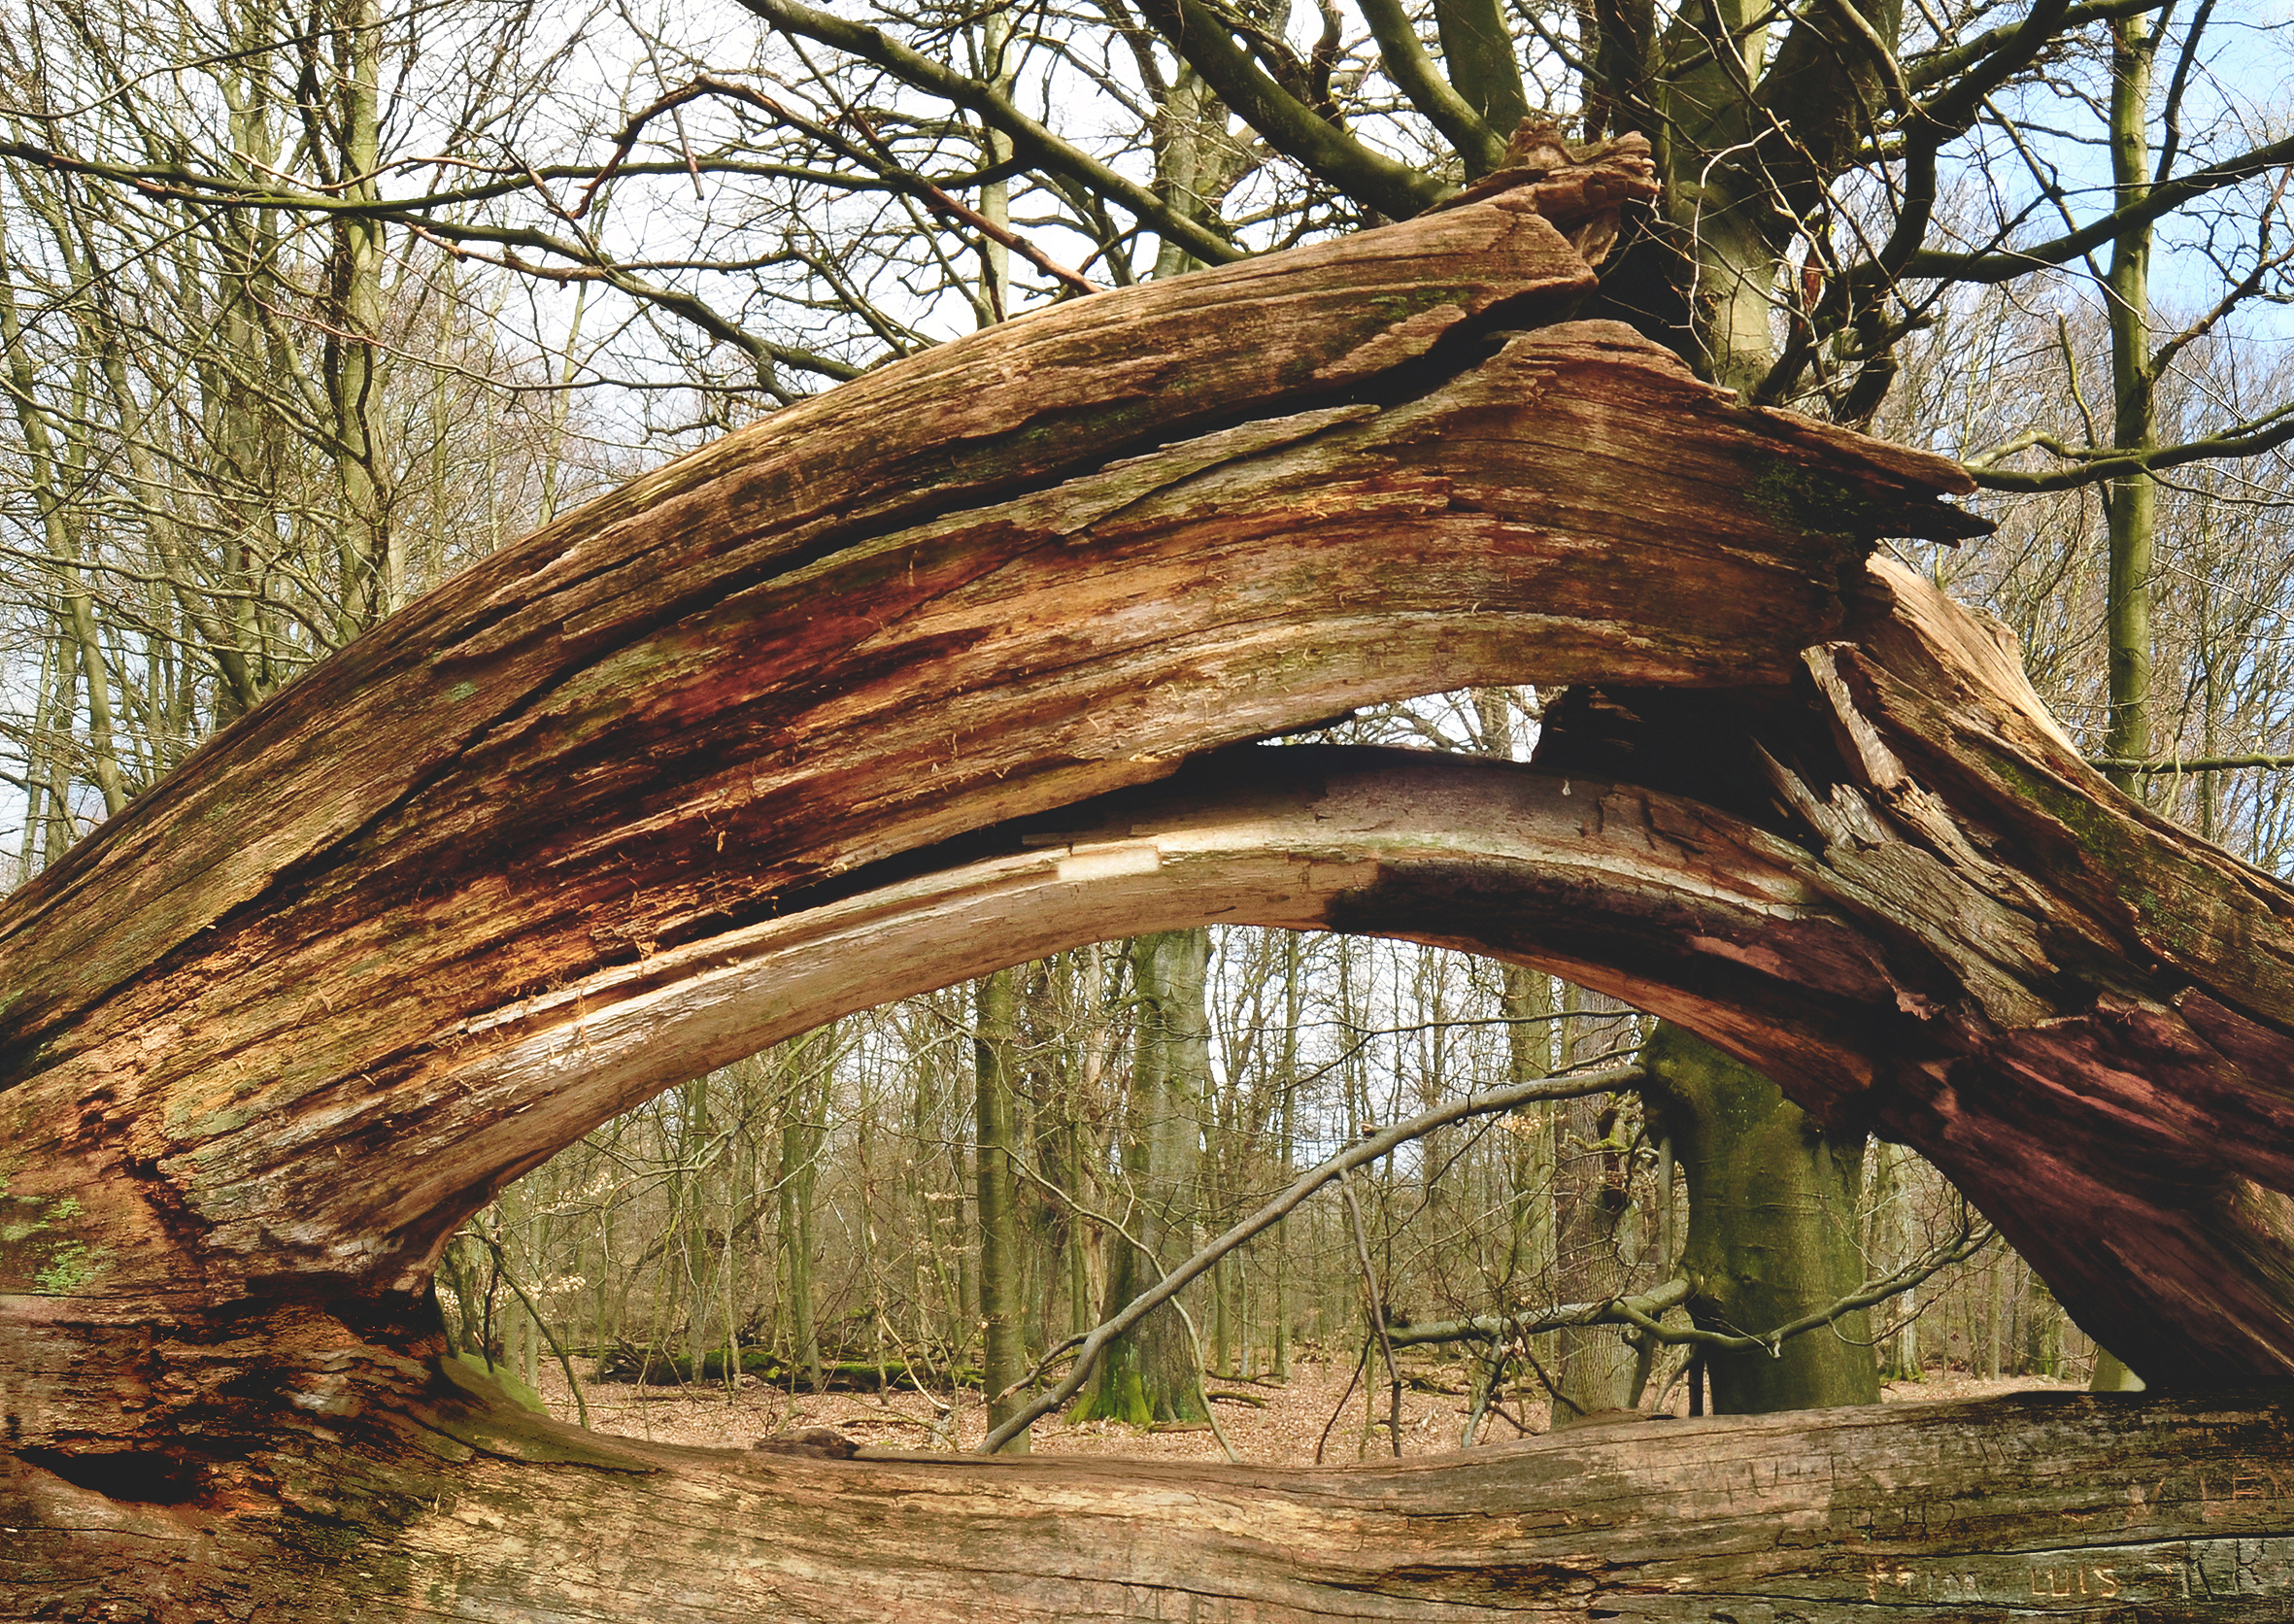 File:Broken tree in the primeval forest Sababurg.jpg - Wikimedia Commons